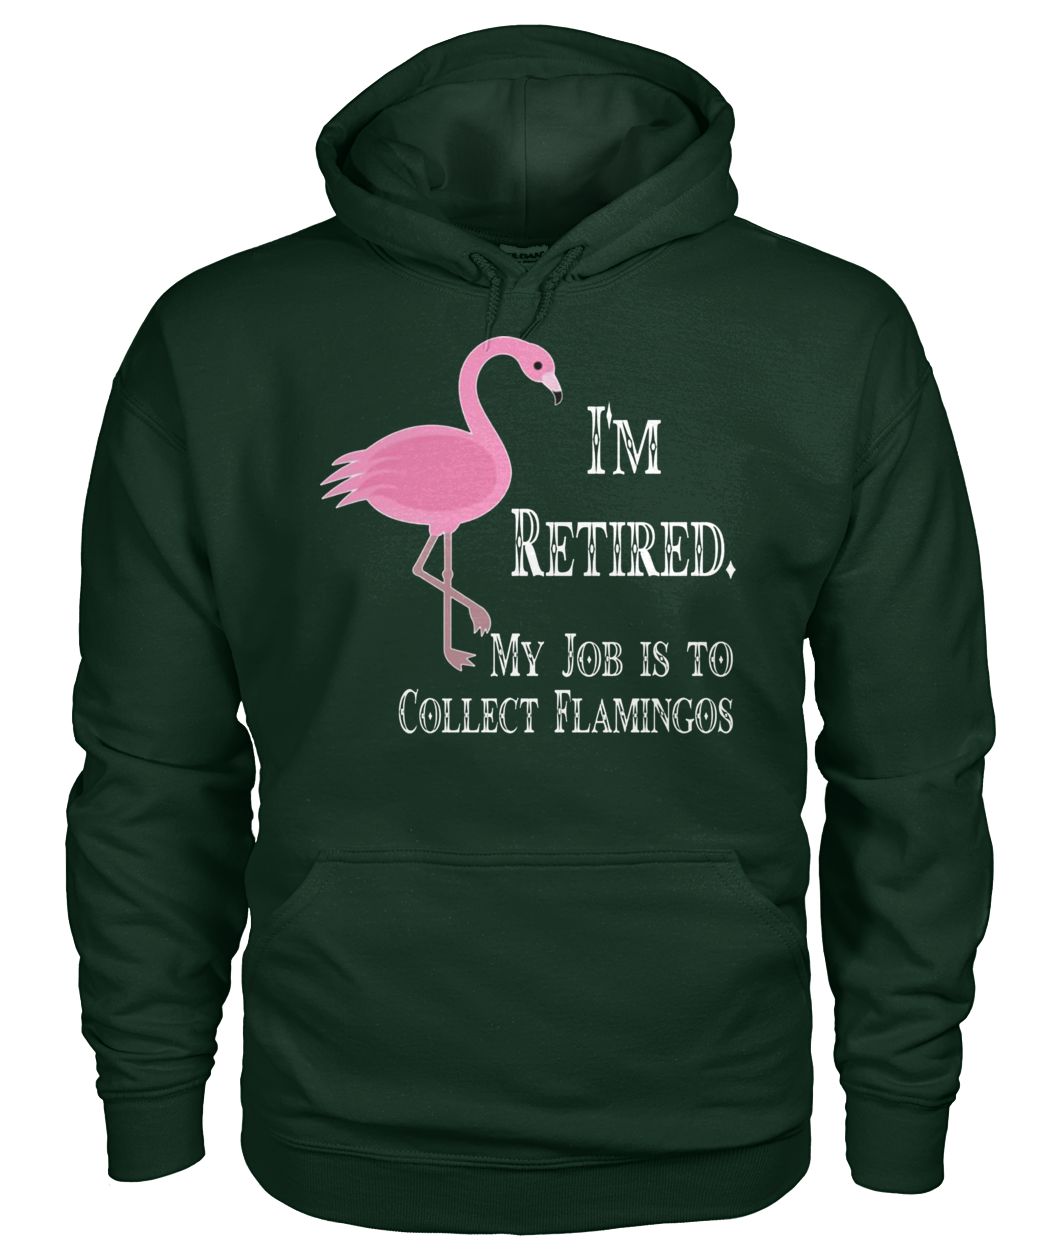 I'm retired my job is to collect flamingos gildan hoodie